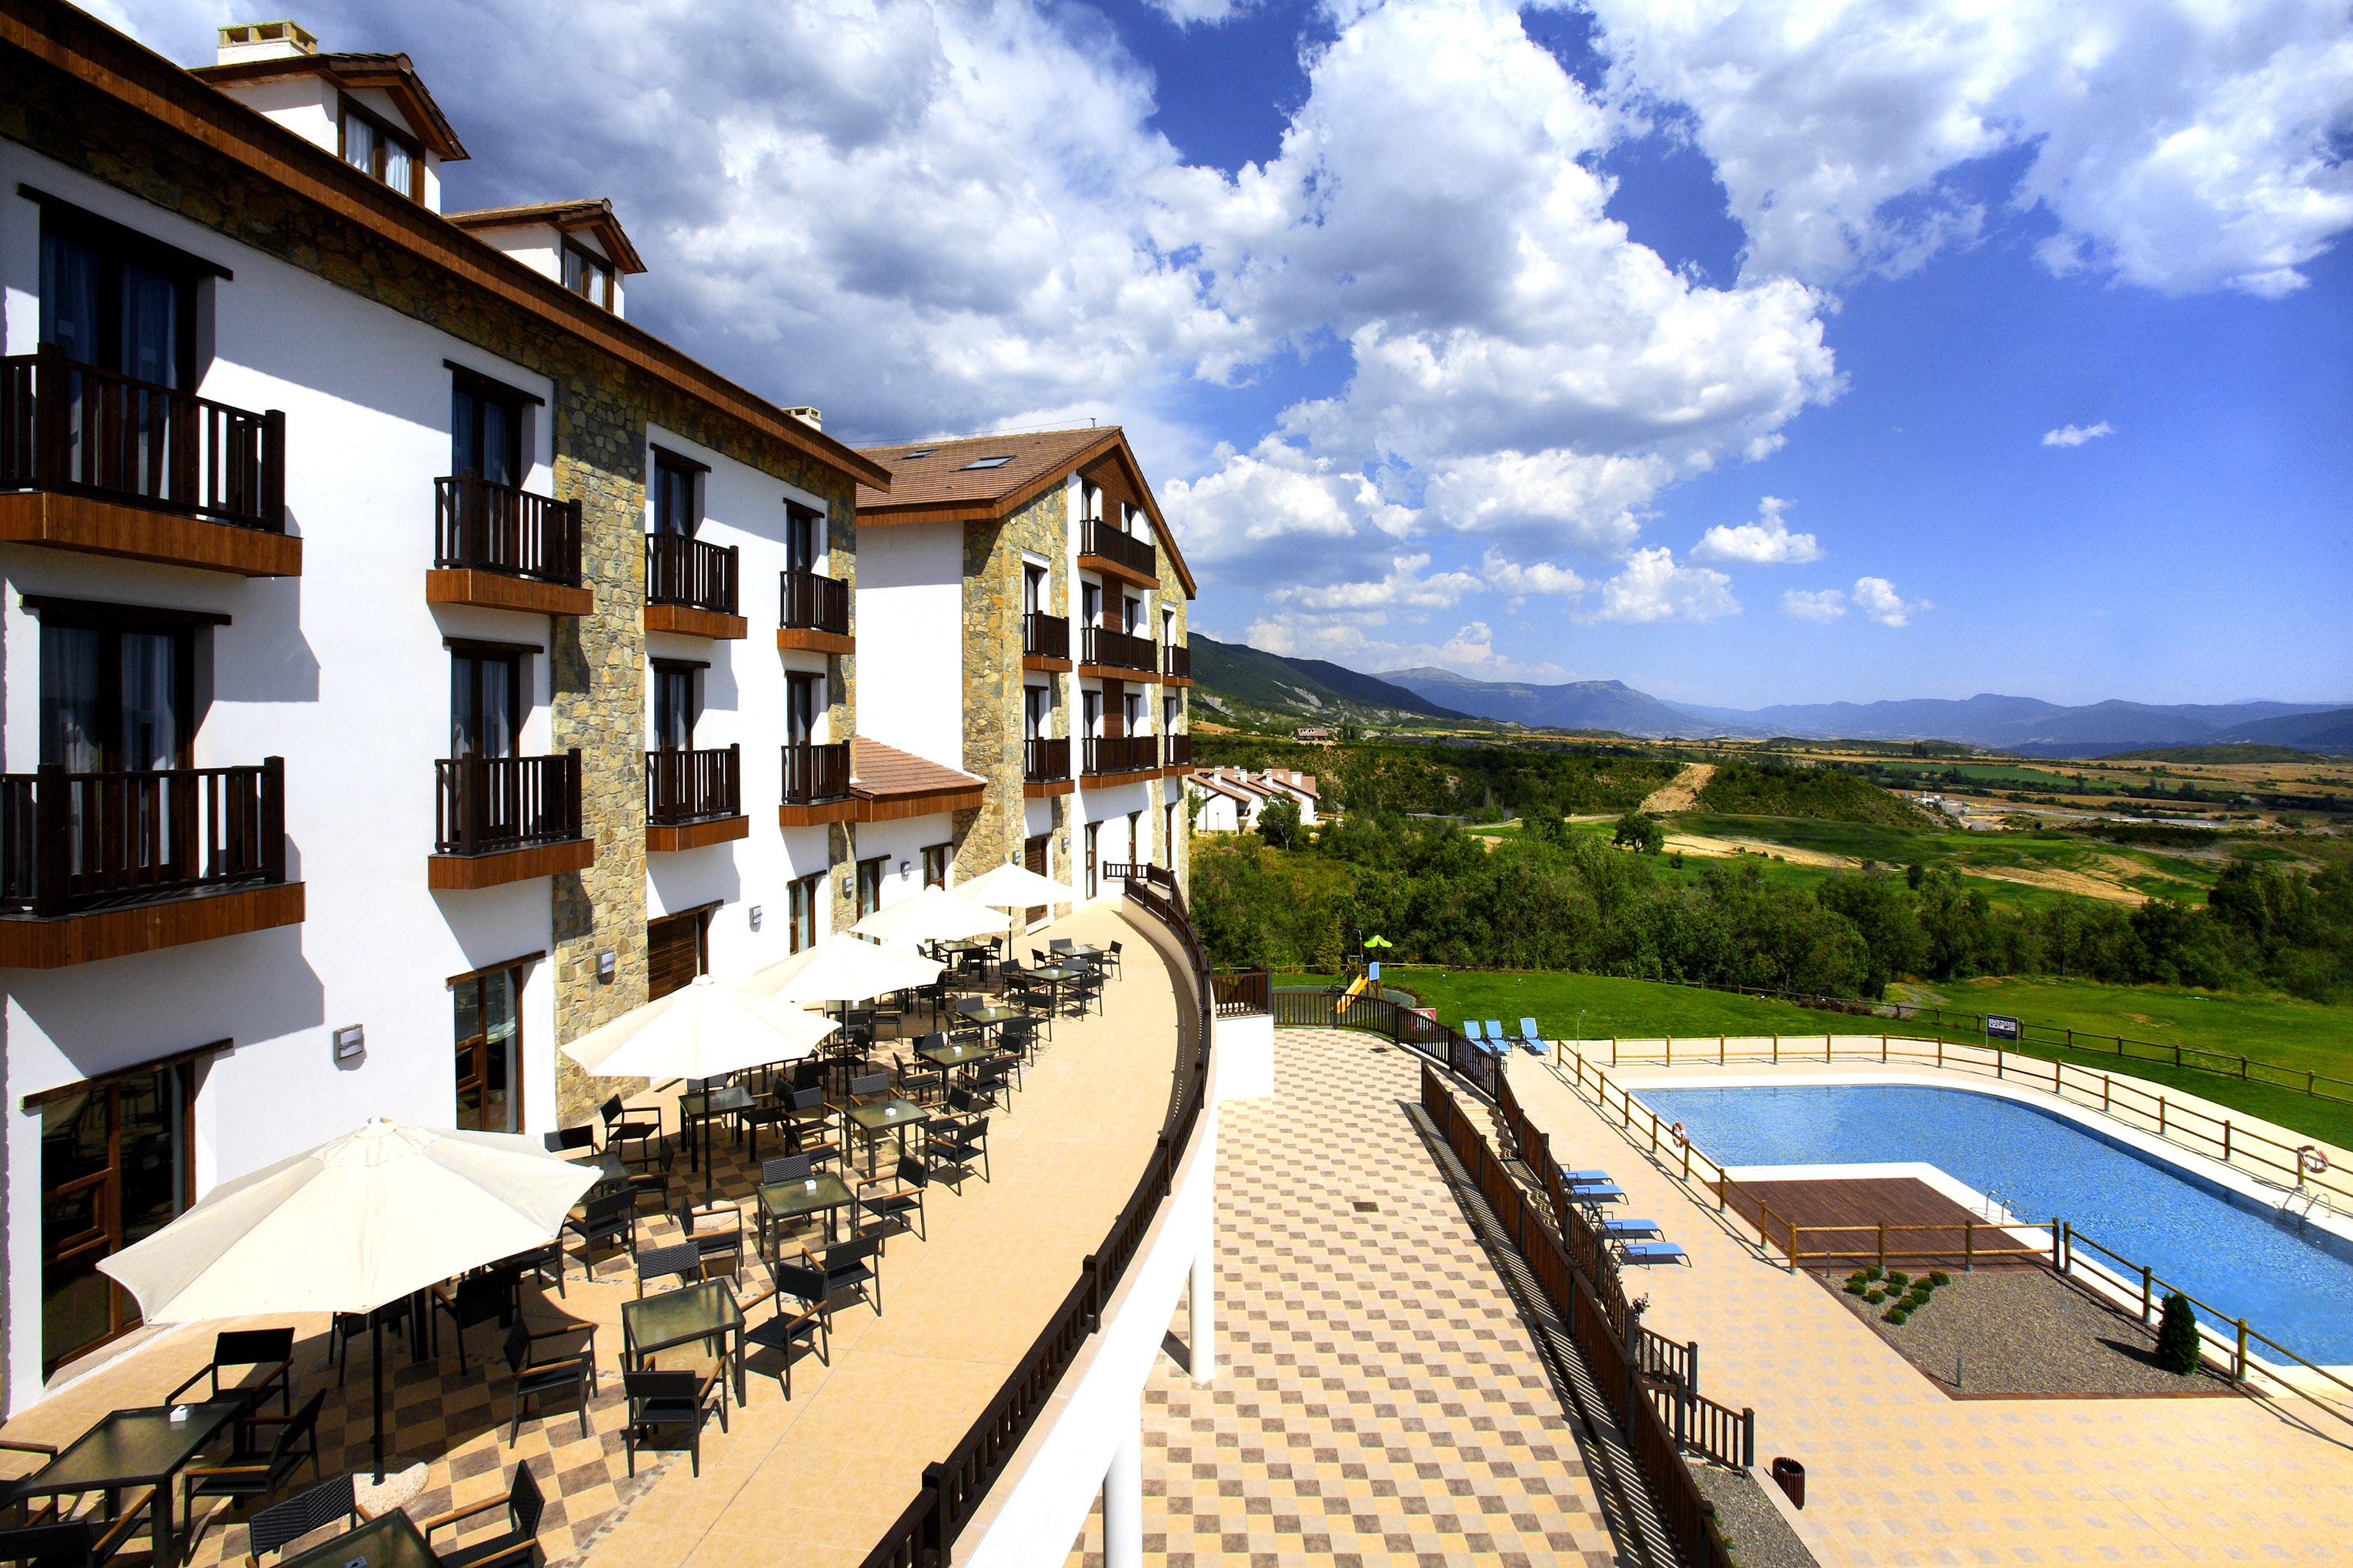 Hotel & Spa Real Badaguas Jaca Exteriér fotografie